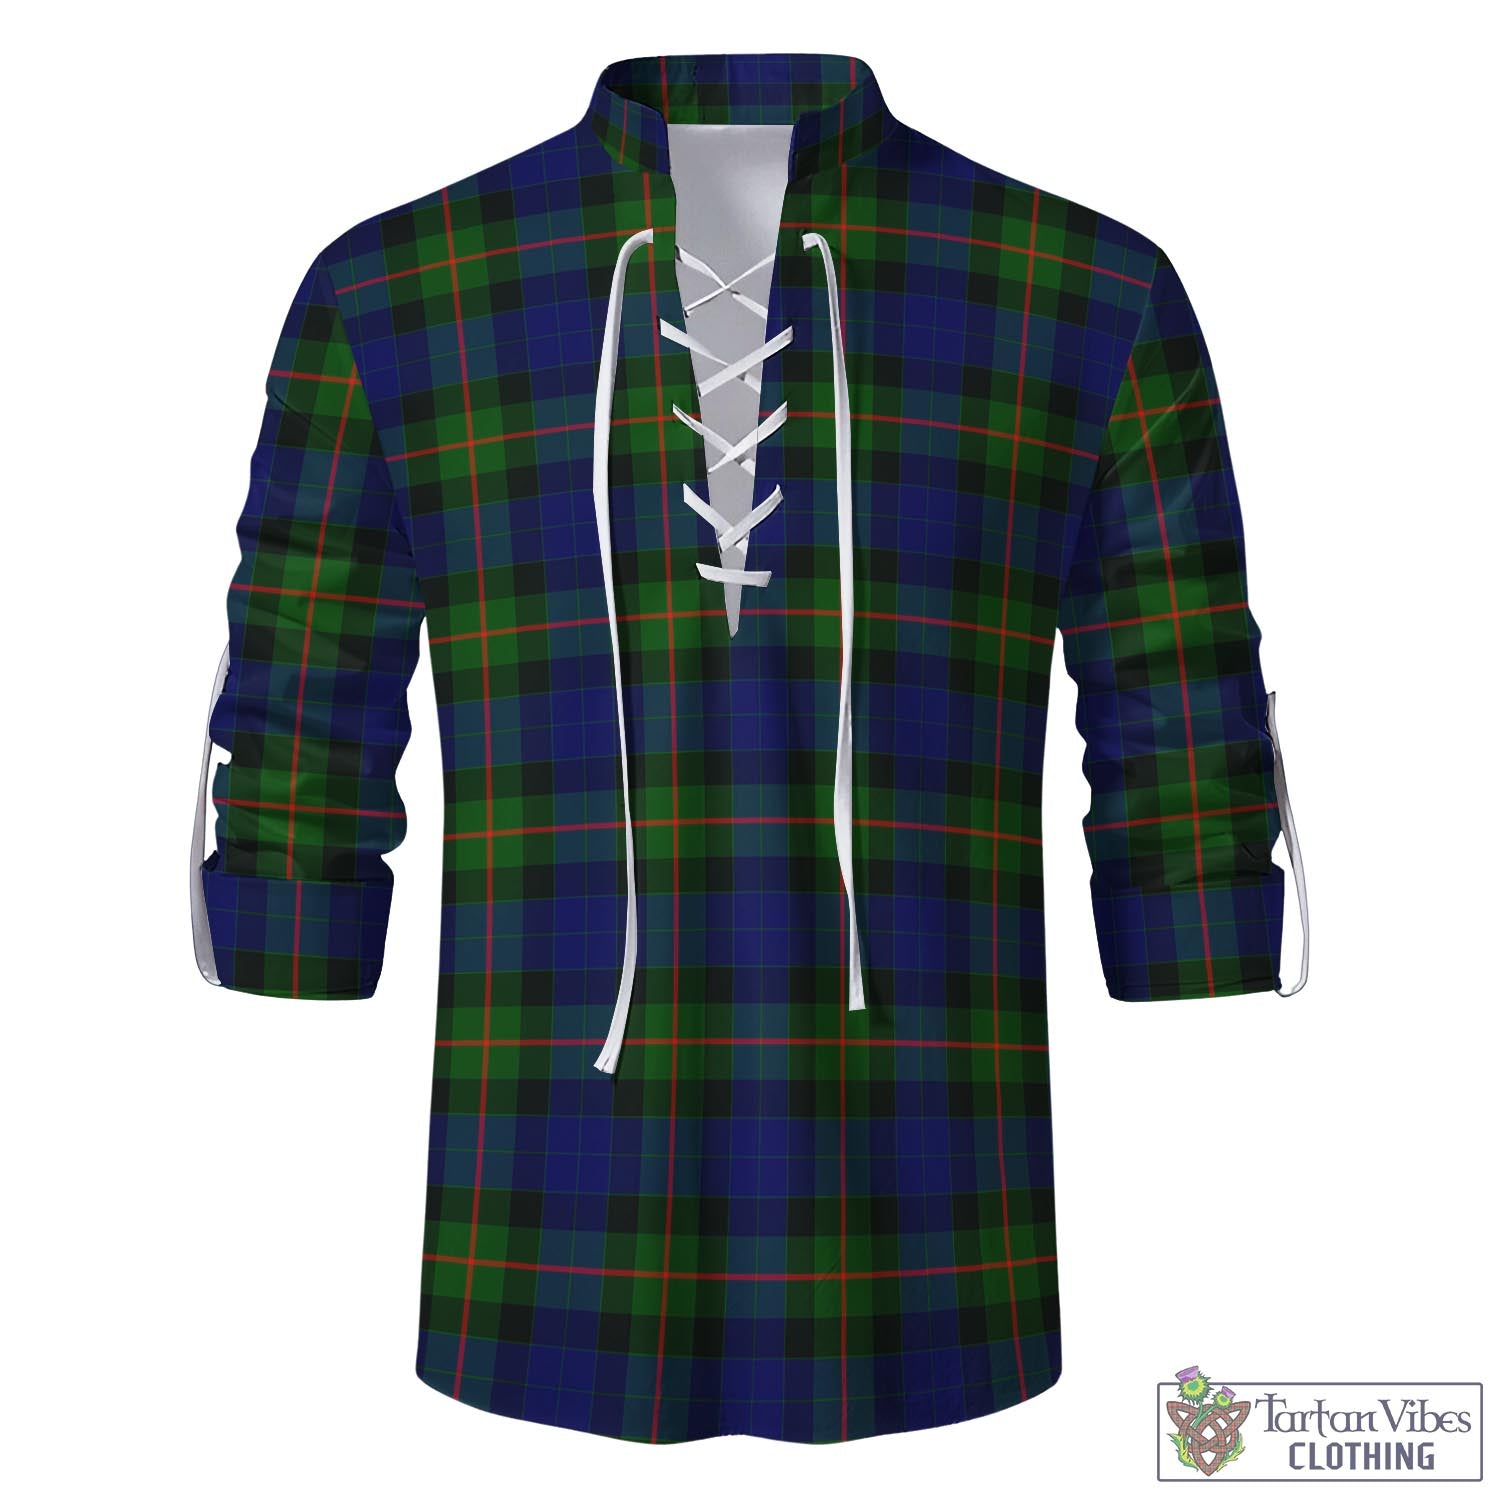 Tartan Vibes Clothing Jamieson Tartan Men's Scottish Traditional Jacobite Ghillie Kilt Shirt